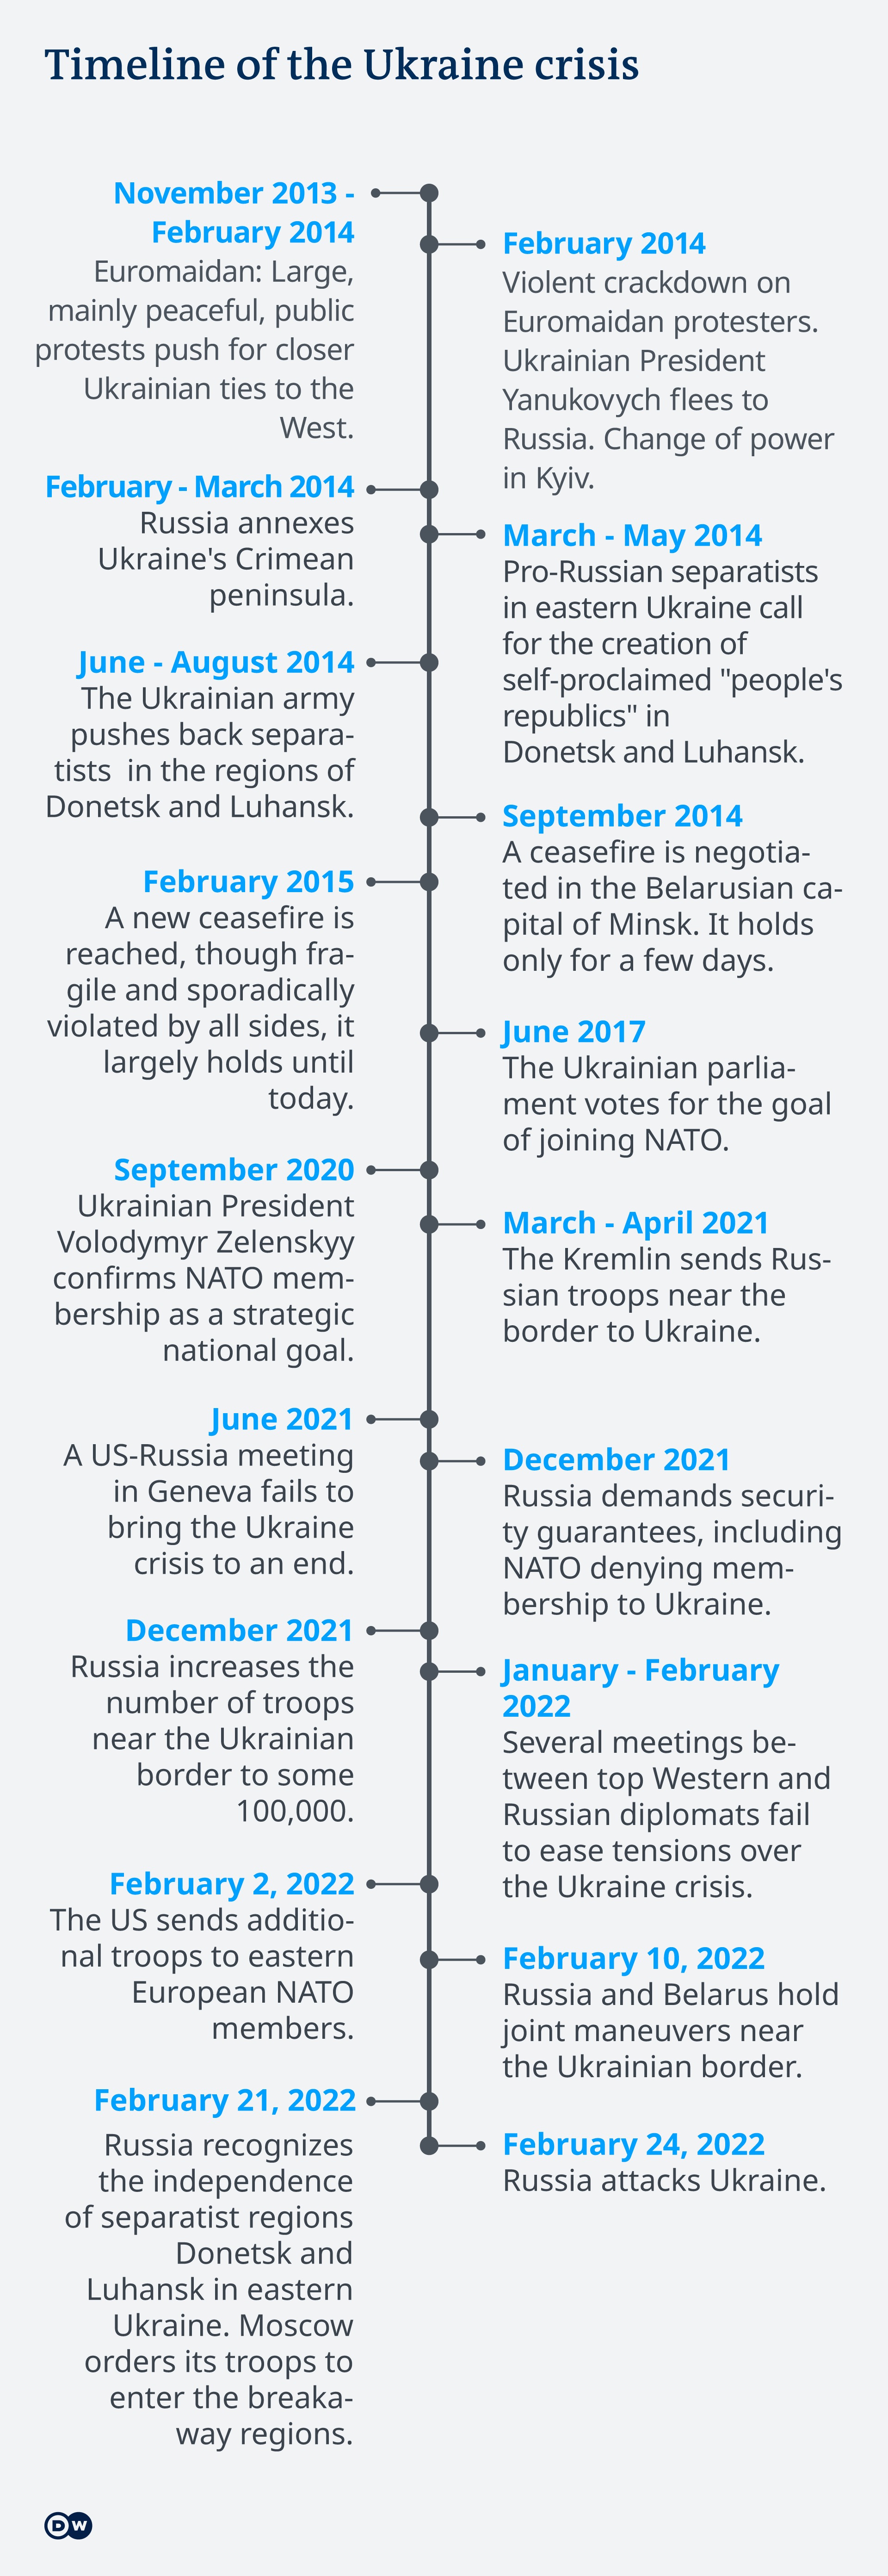 Timeline of the Ukraine crisis